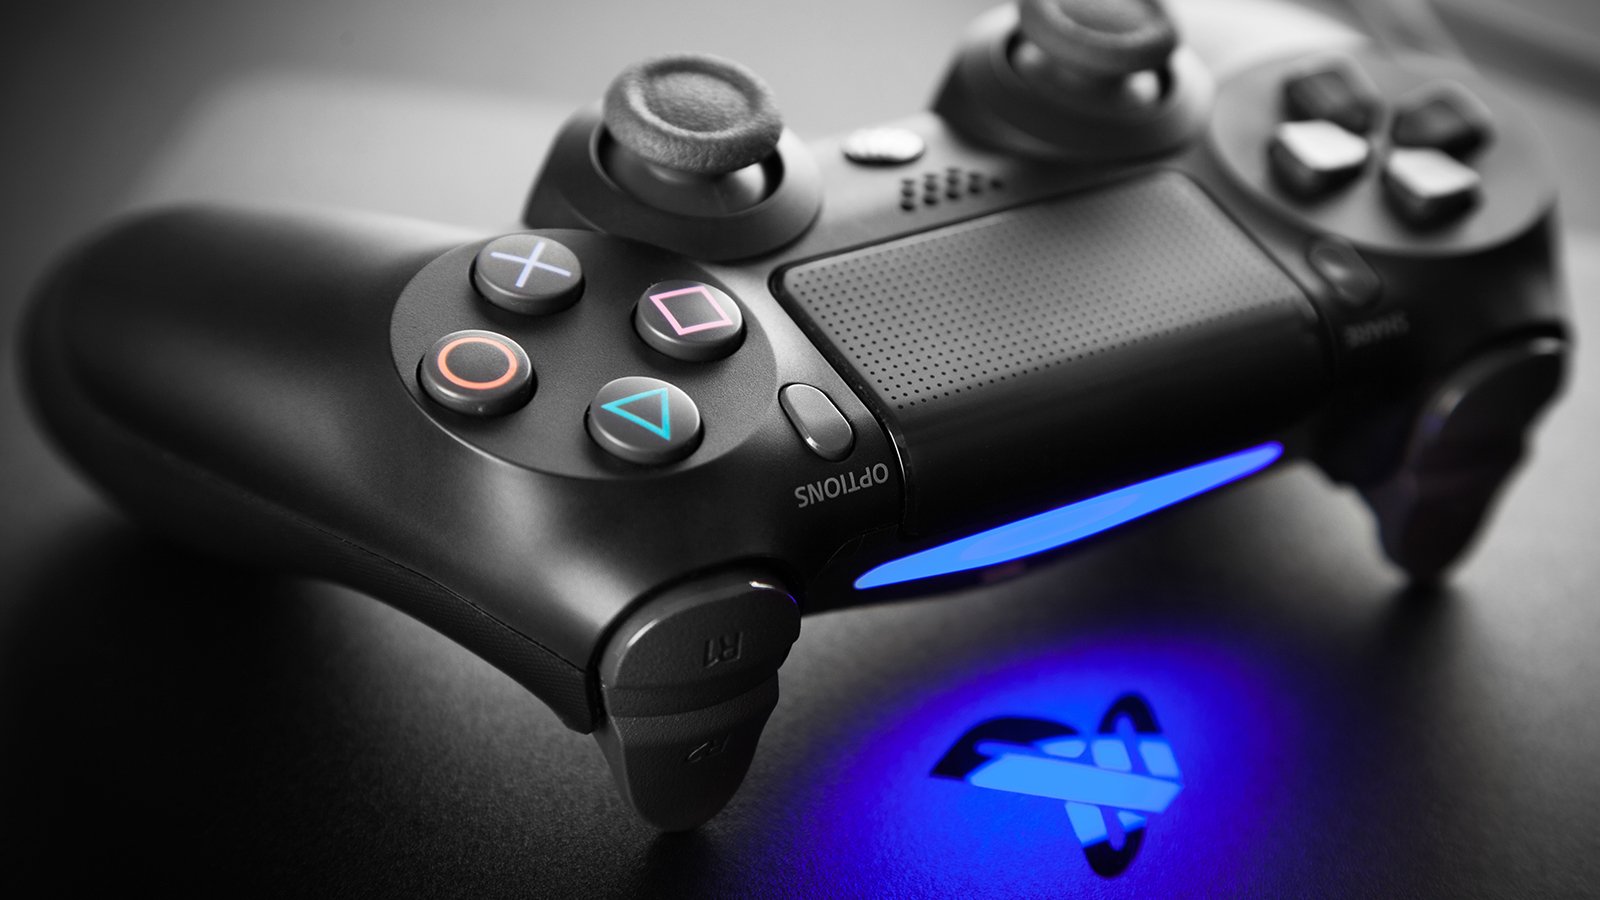 Les ventes de la PlayStation 4 souffrent de l'arrivée imminente de la PS5